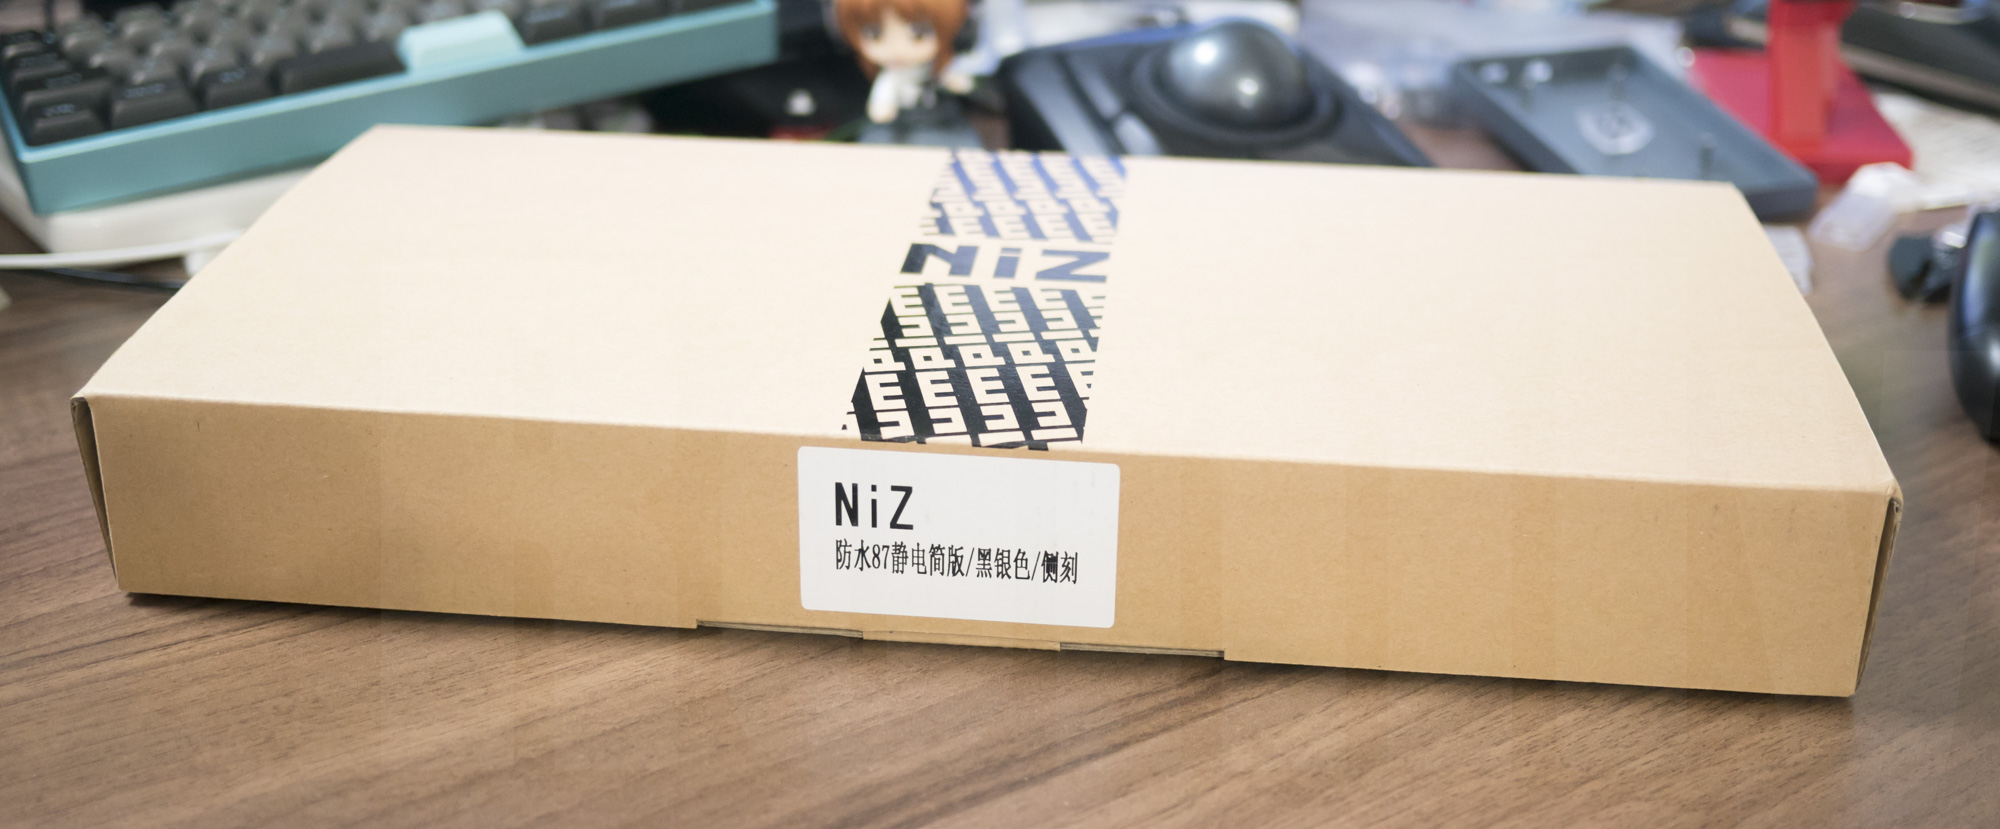 NiZ plum keyboard パッケージ